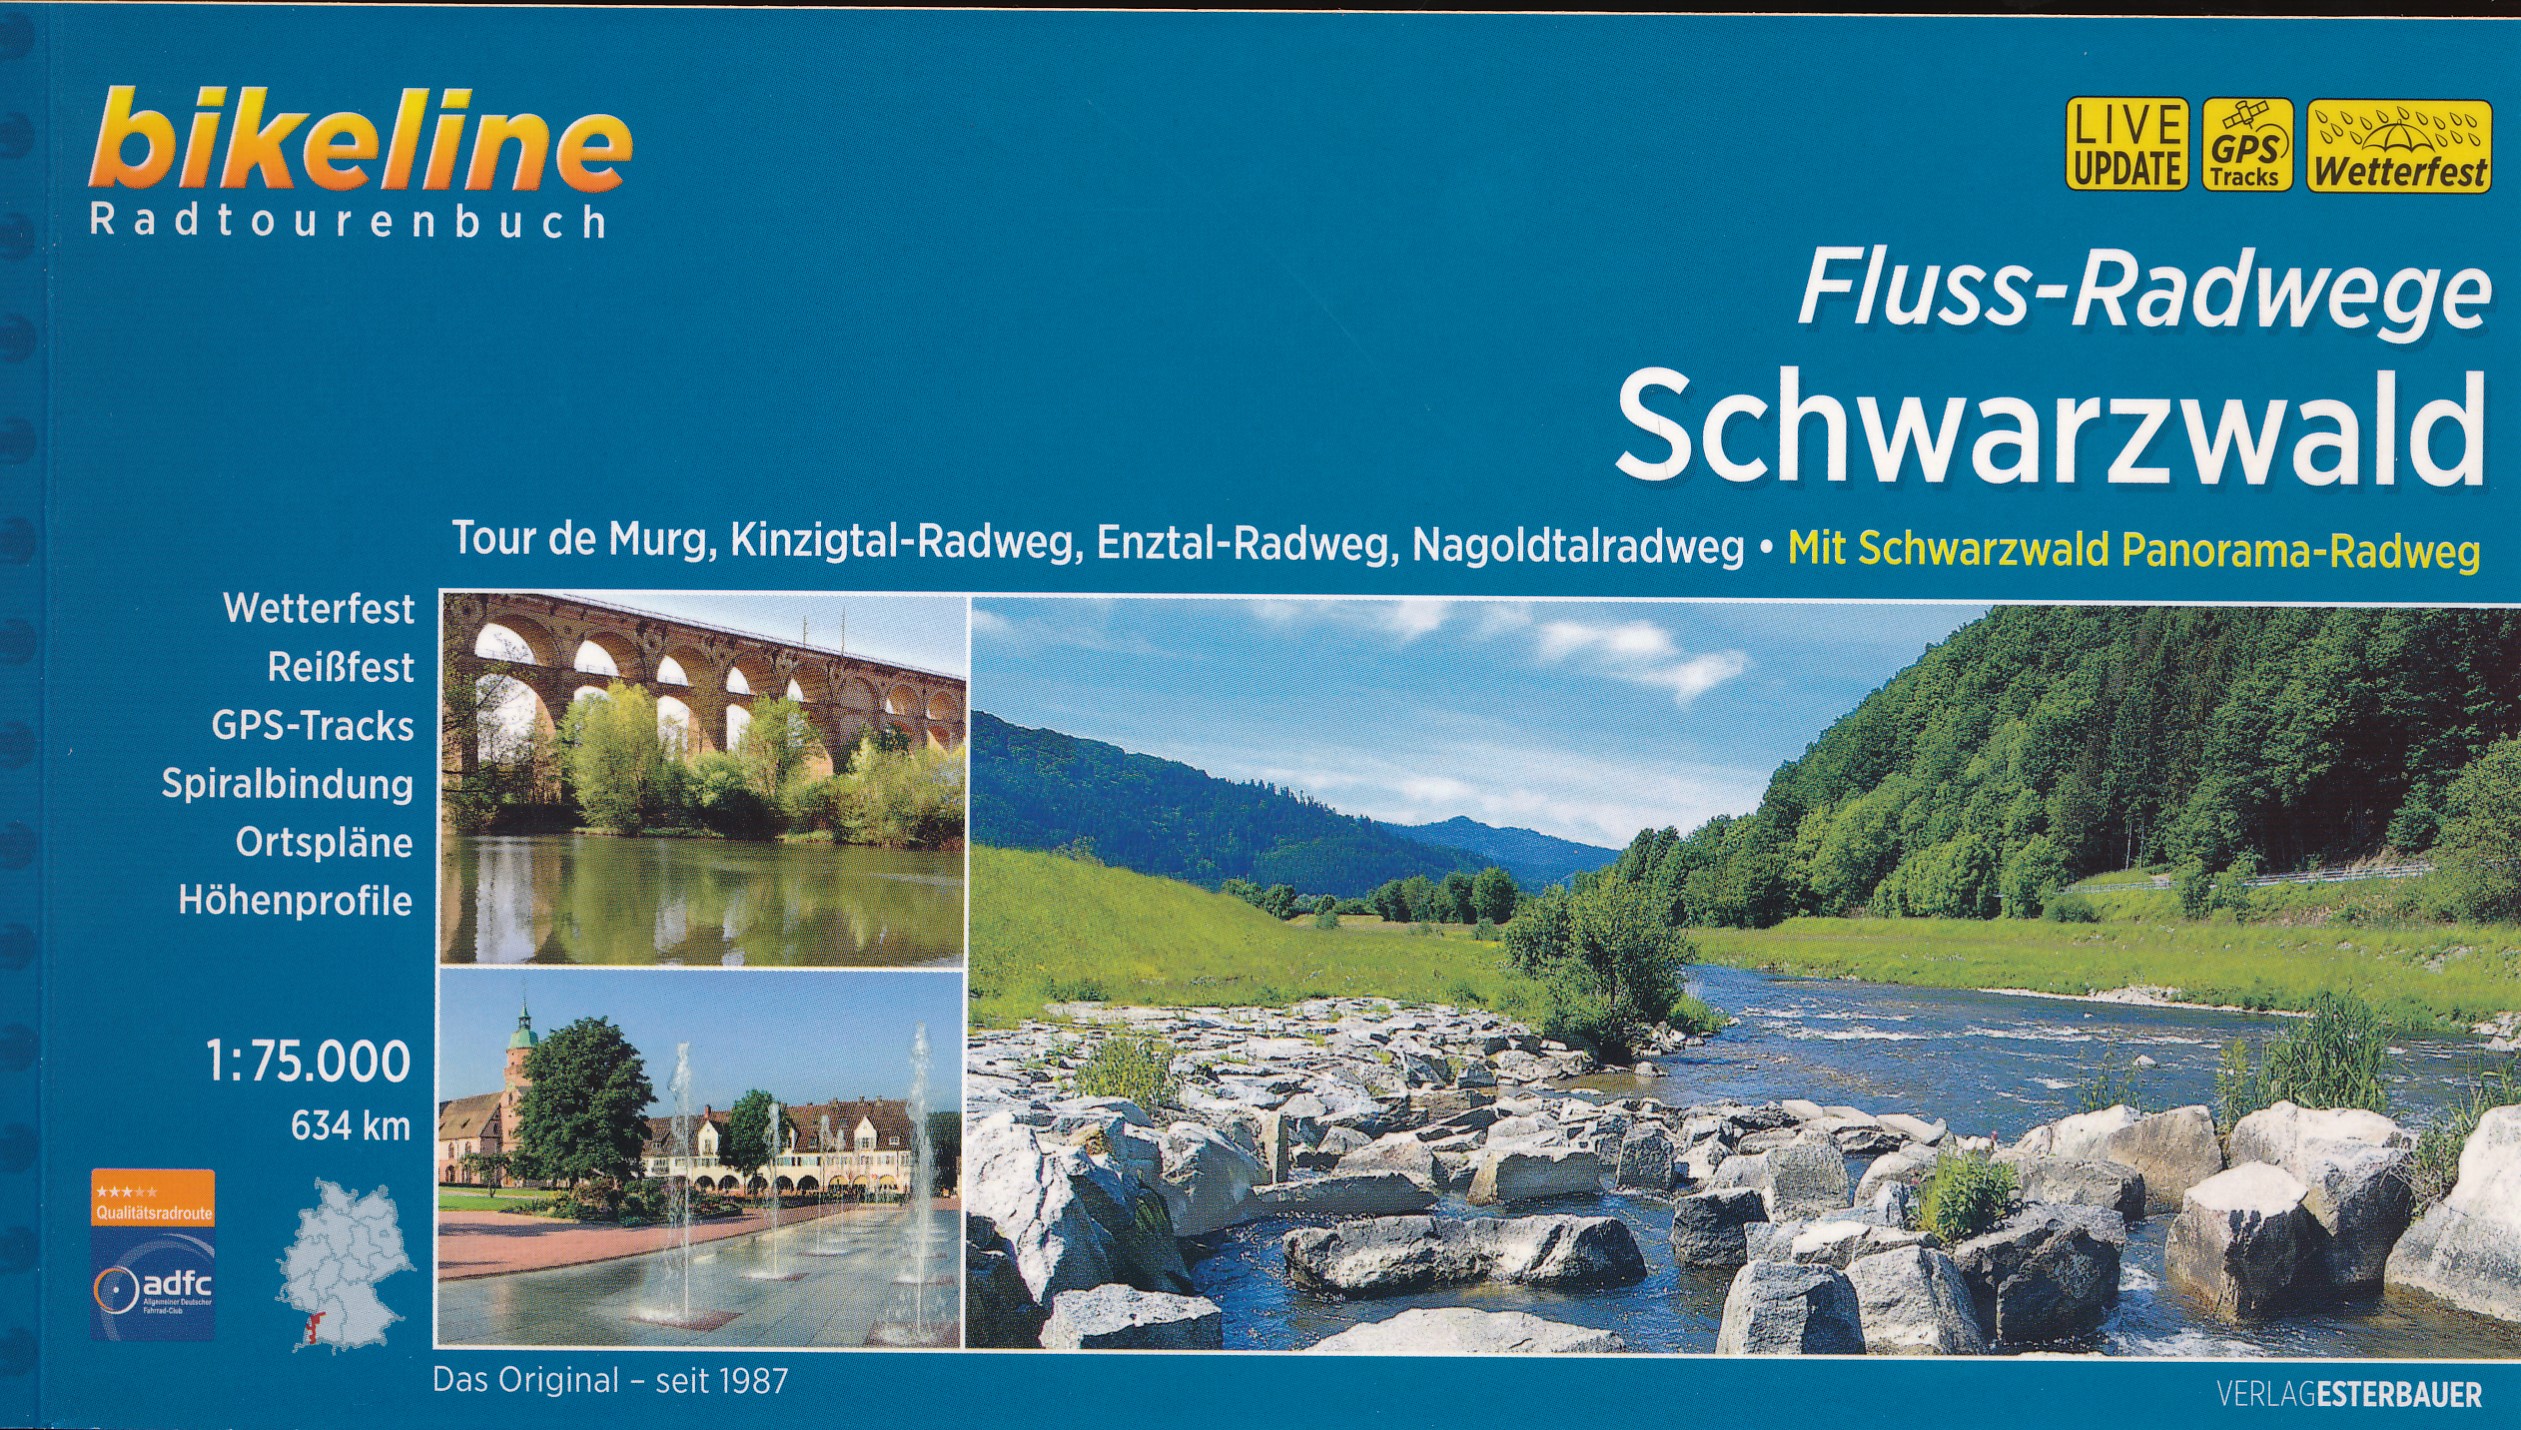 Online bestellen: Fietsgids Bikeline Fluss-Radwege Schwarzwald - Zwarte Woud | Esterbauer